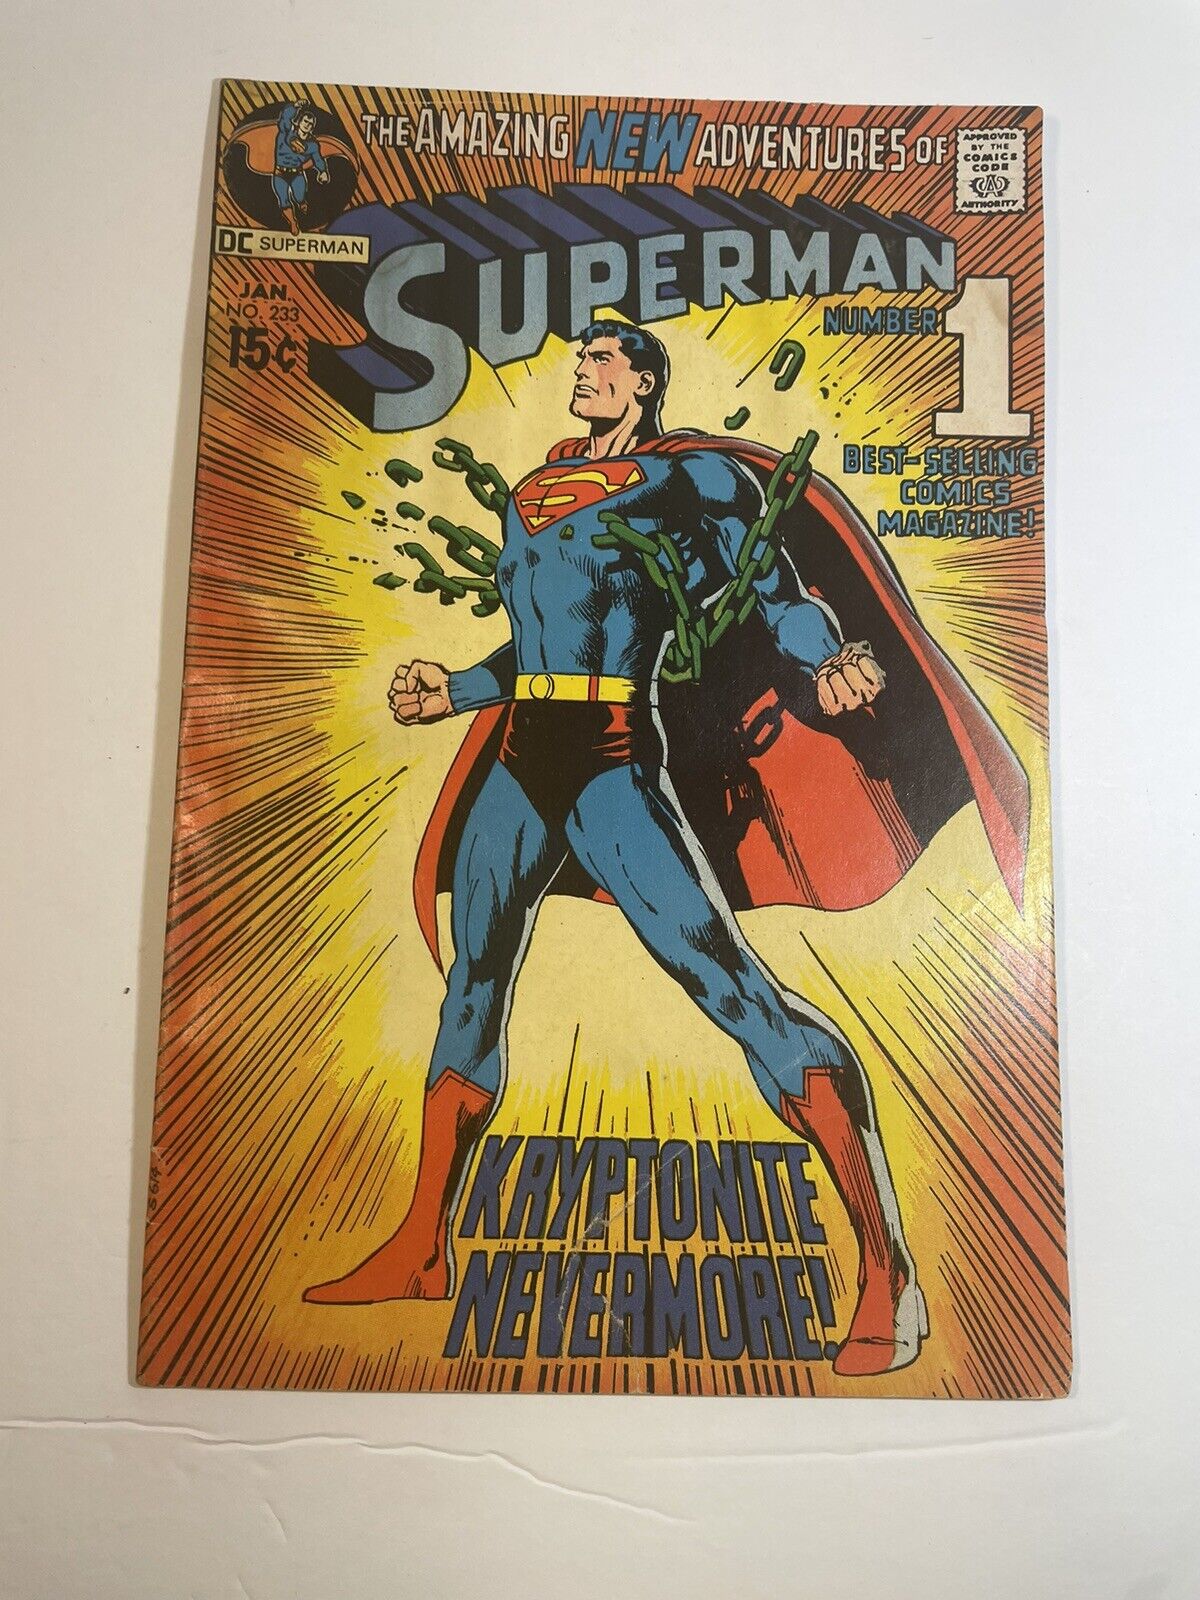 SUPERMAN # 233 DC COMICS January 1971 NEAL ADAMS CLASSIC COVER NEW STORYLINE